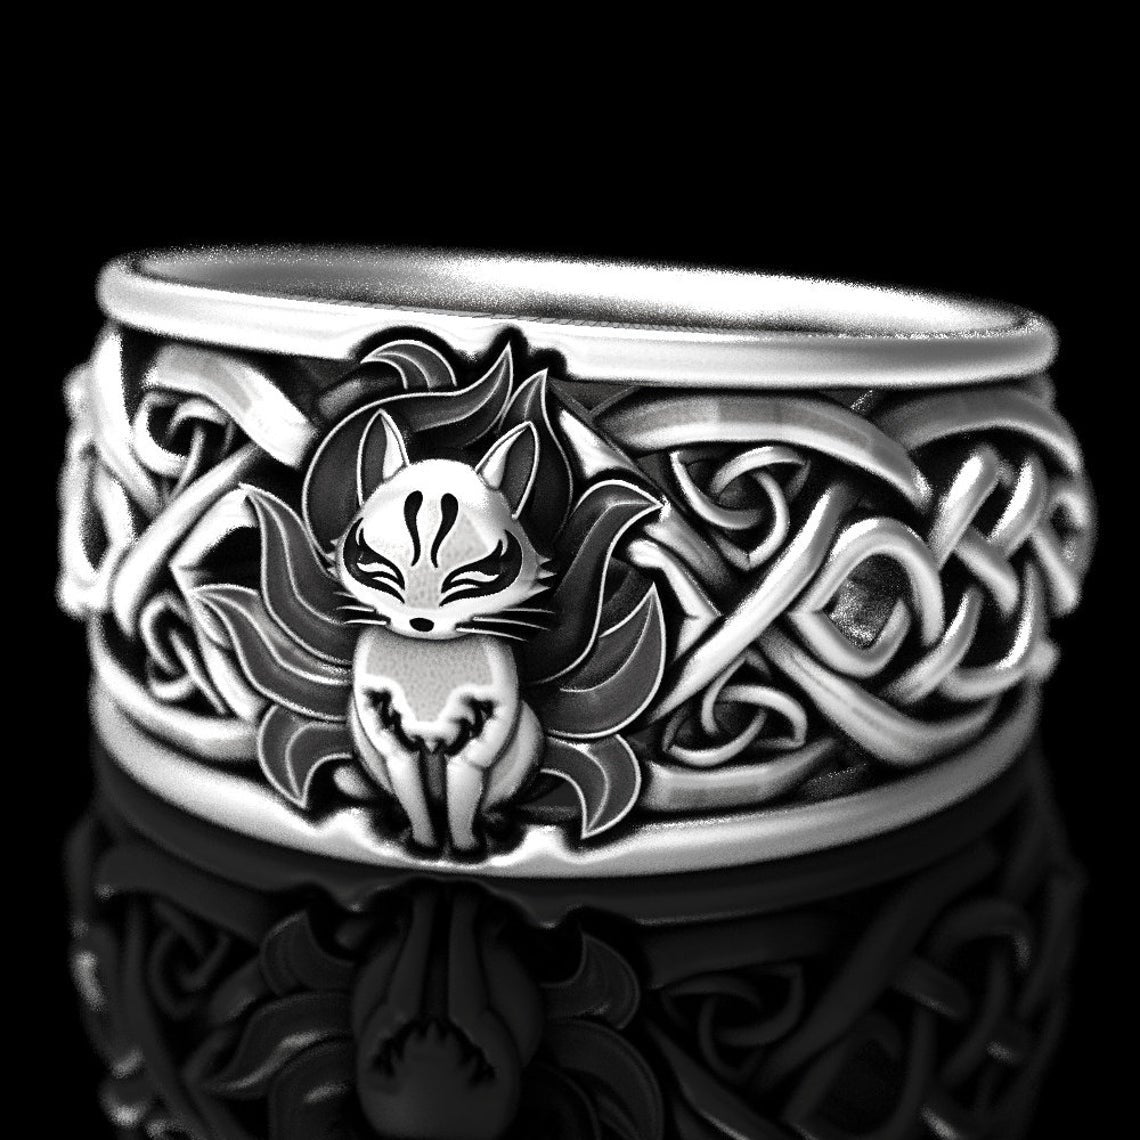 The Viking Fox Celtic Ring